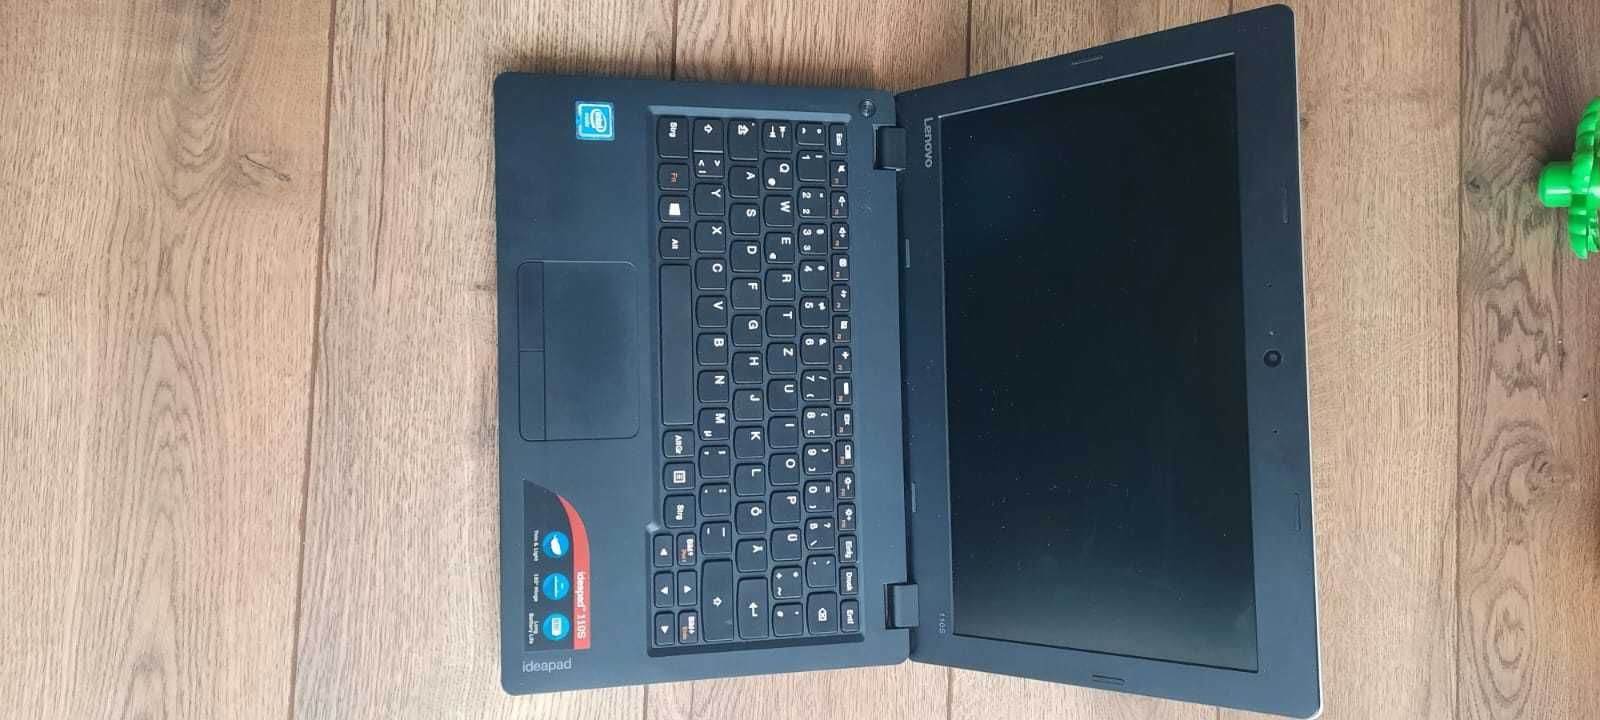 Laptop Lenovo ideapad 110S Intel N3060